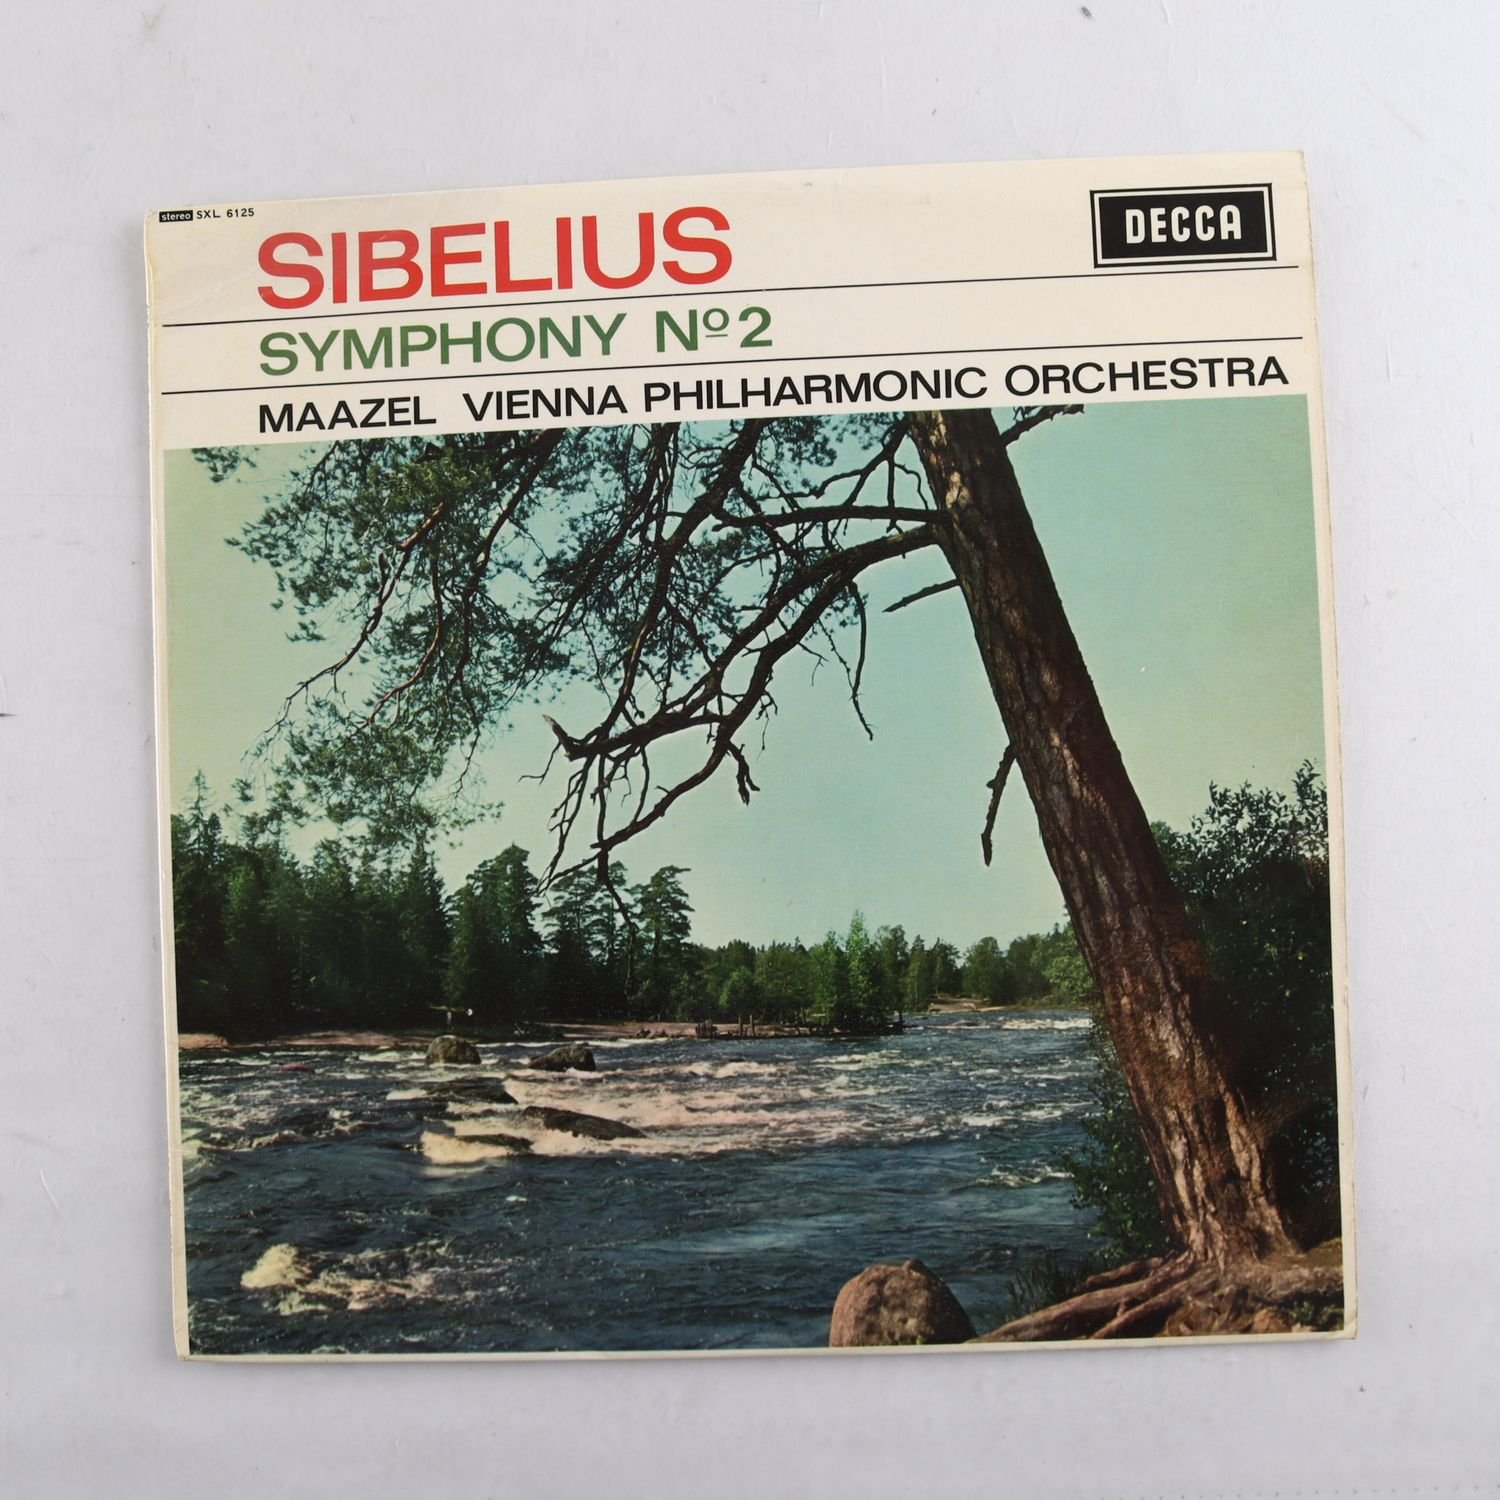 LP Sibelius, Lorin Maazel, Vienna Philharmonic Orchestra, Symphony N° 2